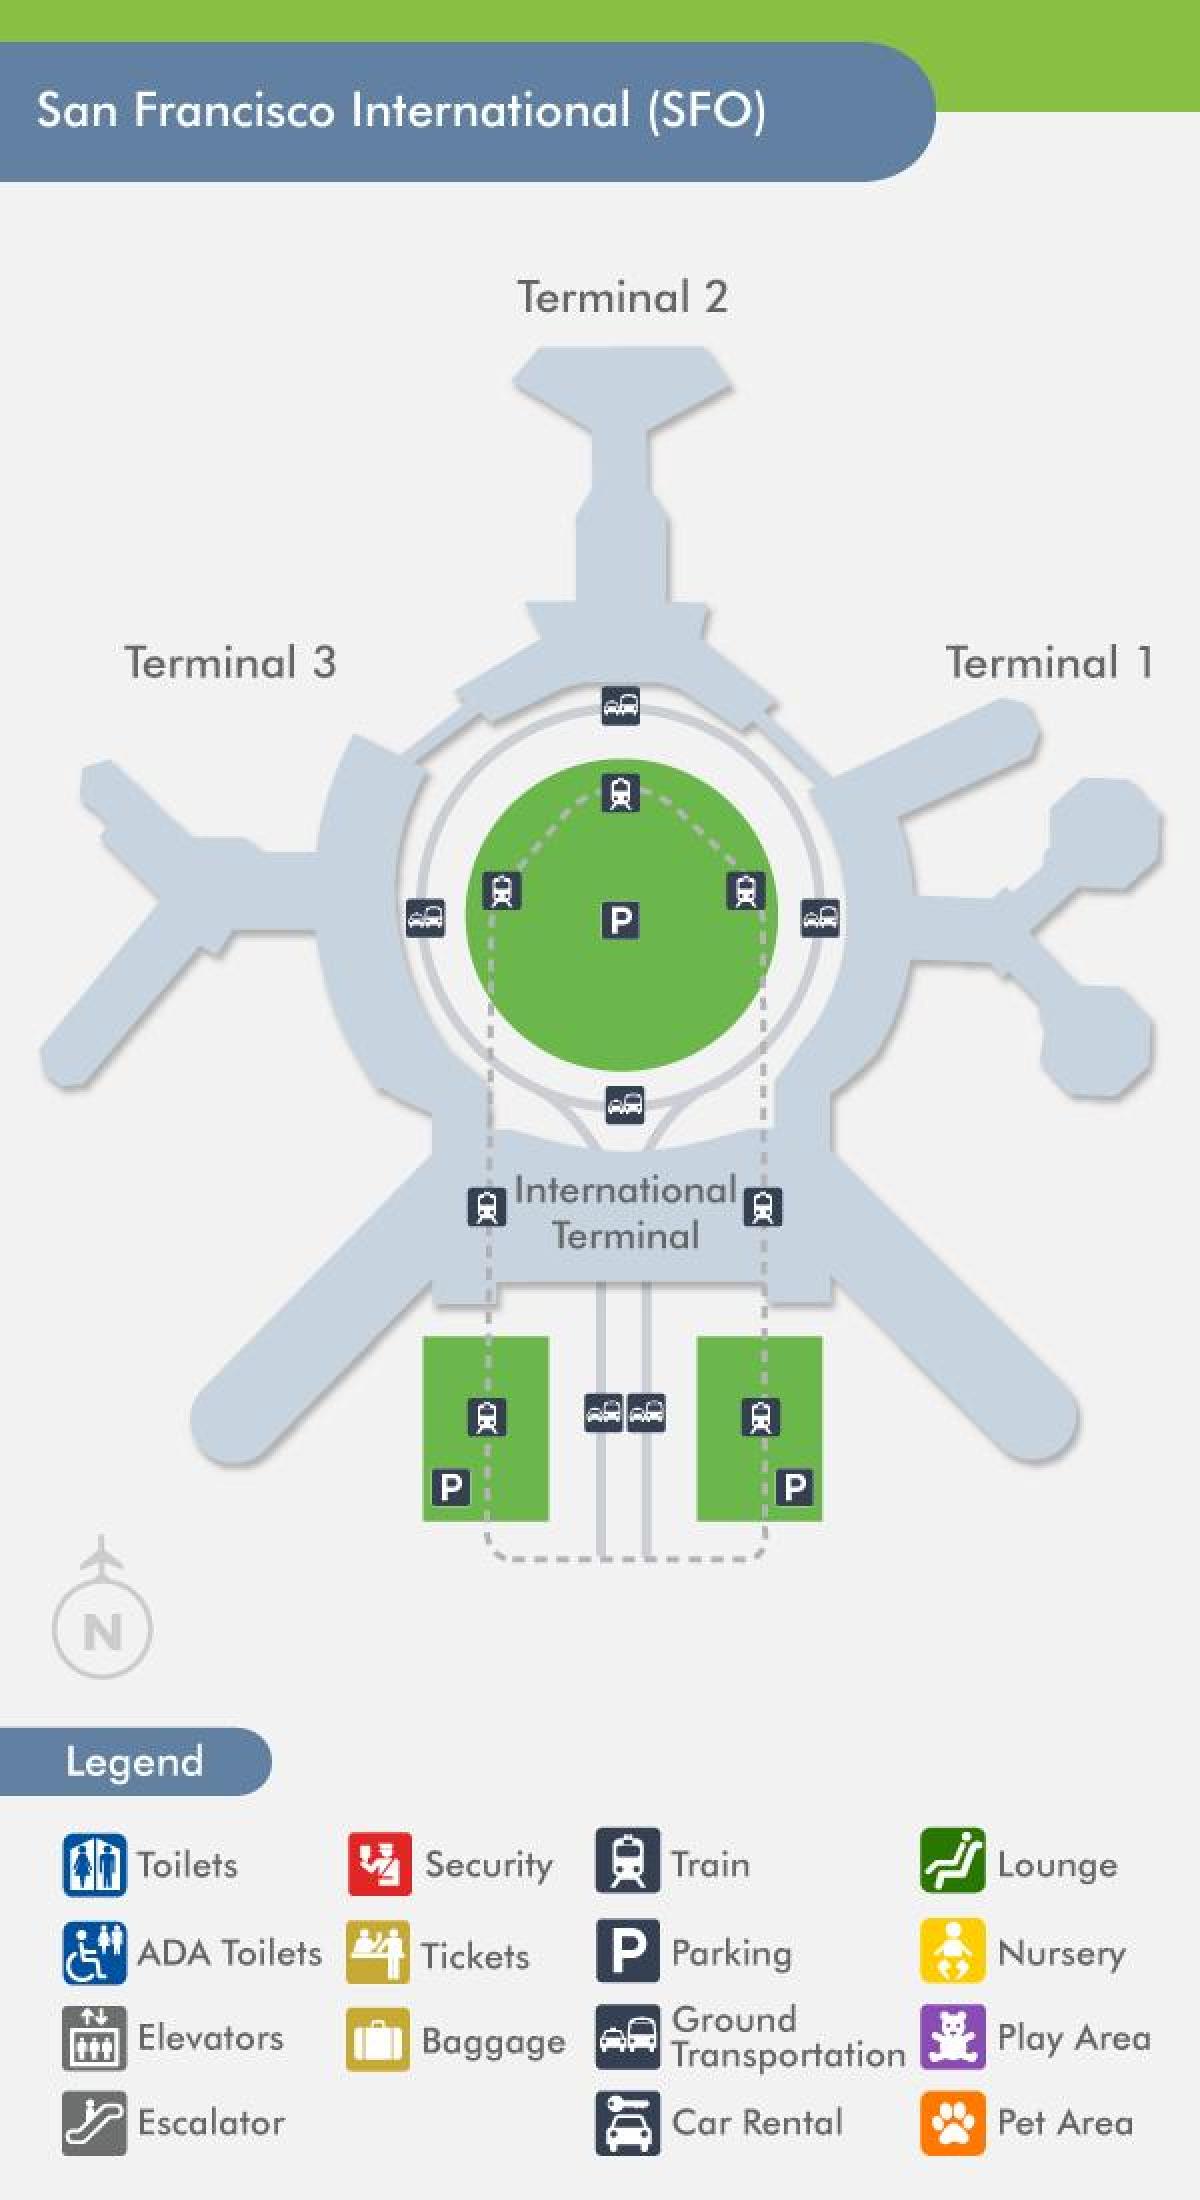 sfo terminal 1 map Sfo Airport Terminal 1 Map Map Of Sfo Airport Terminal 1 sfo terminal 1 map